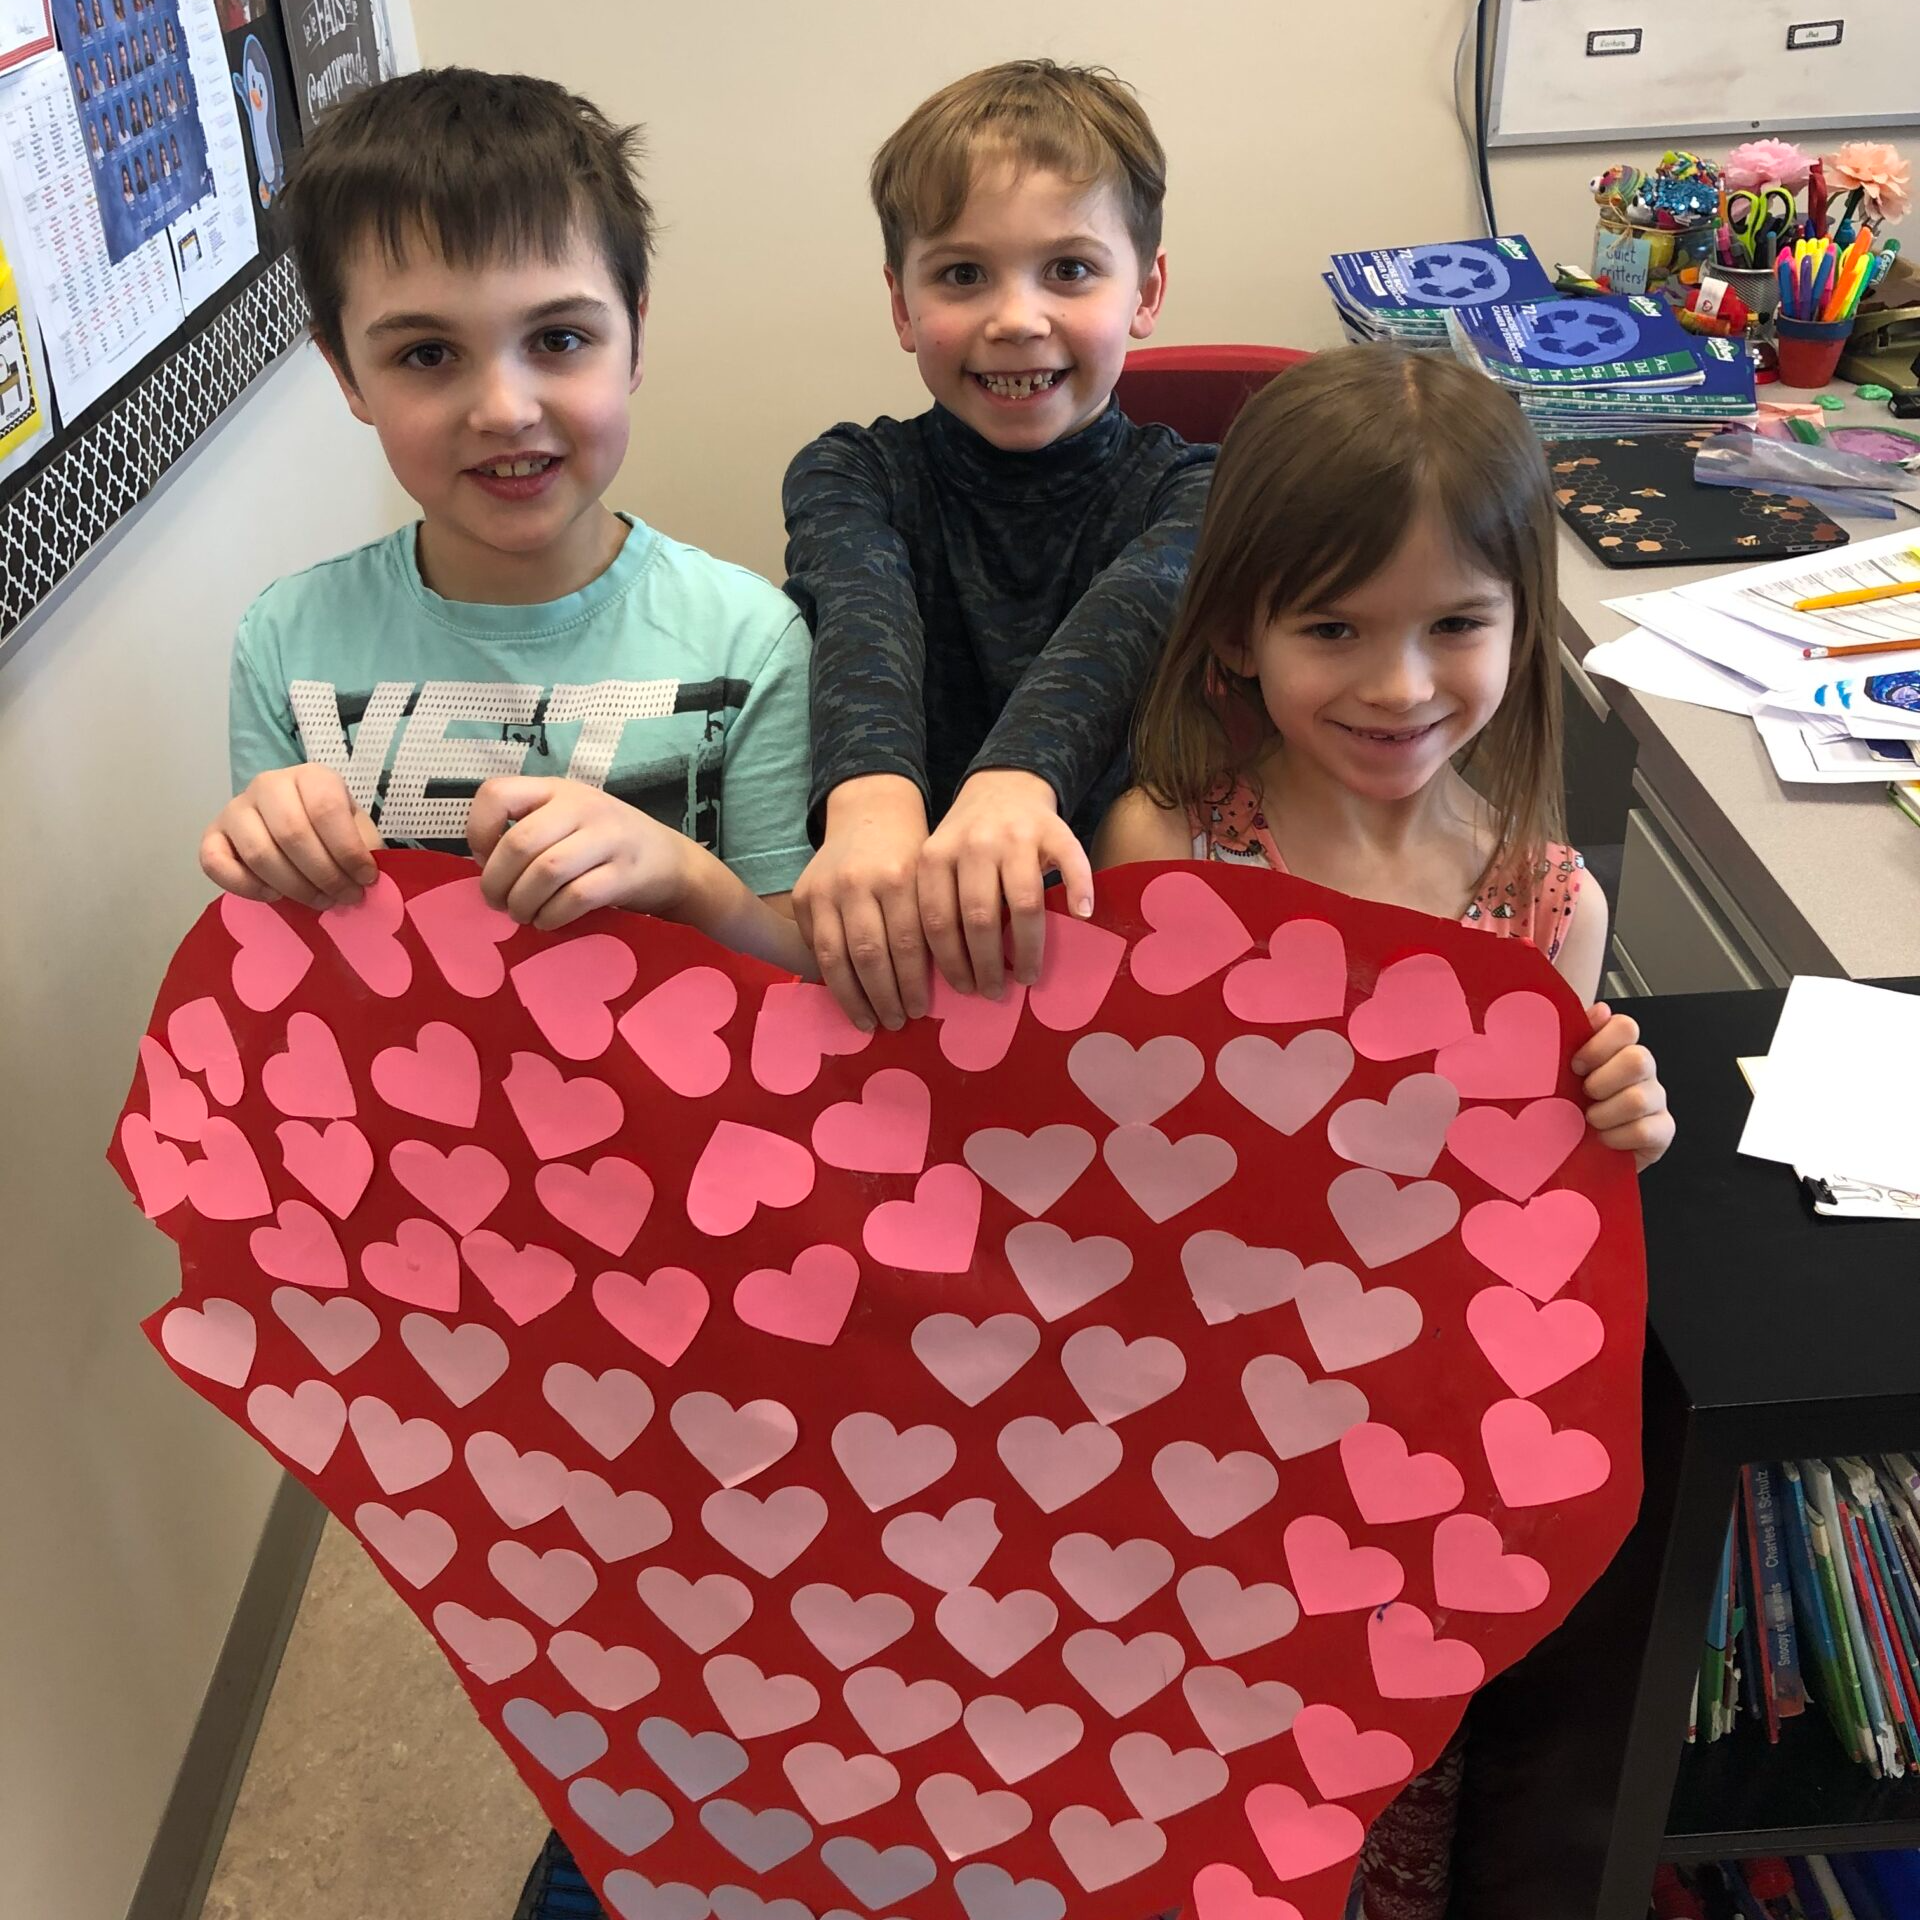 kids holding craftt heart-shaped like